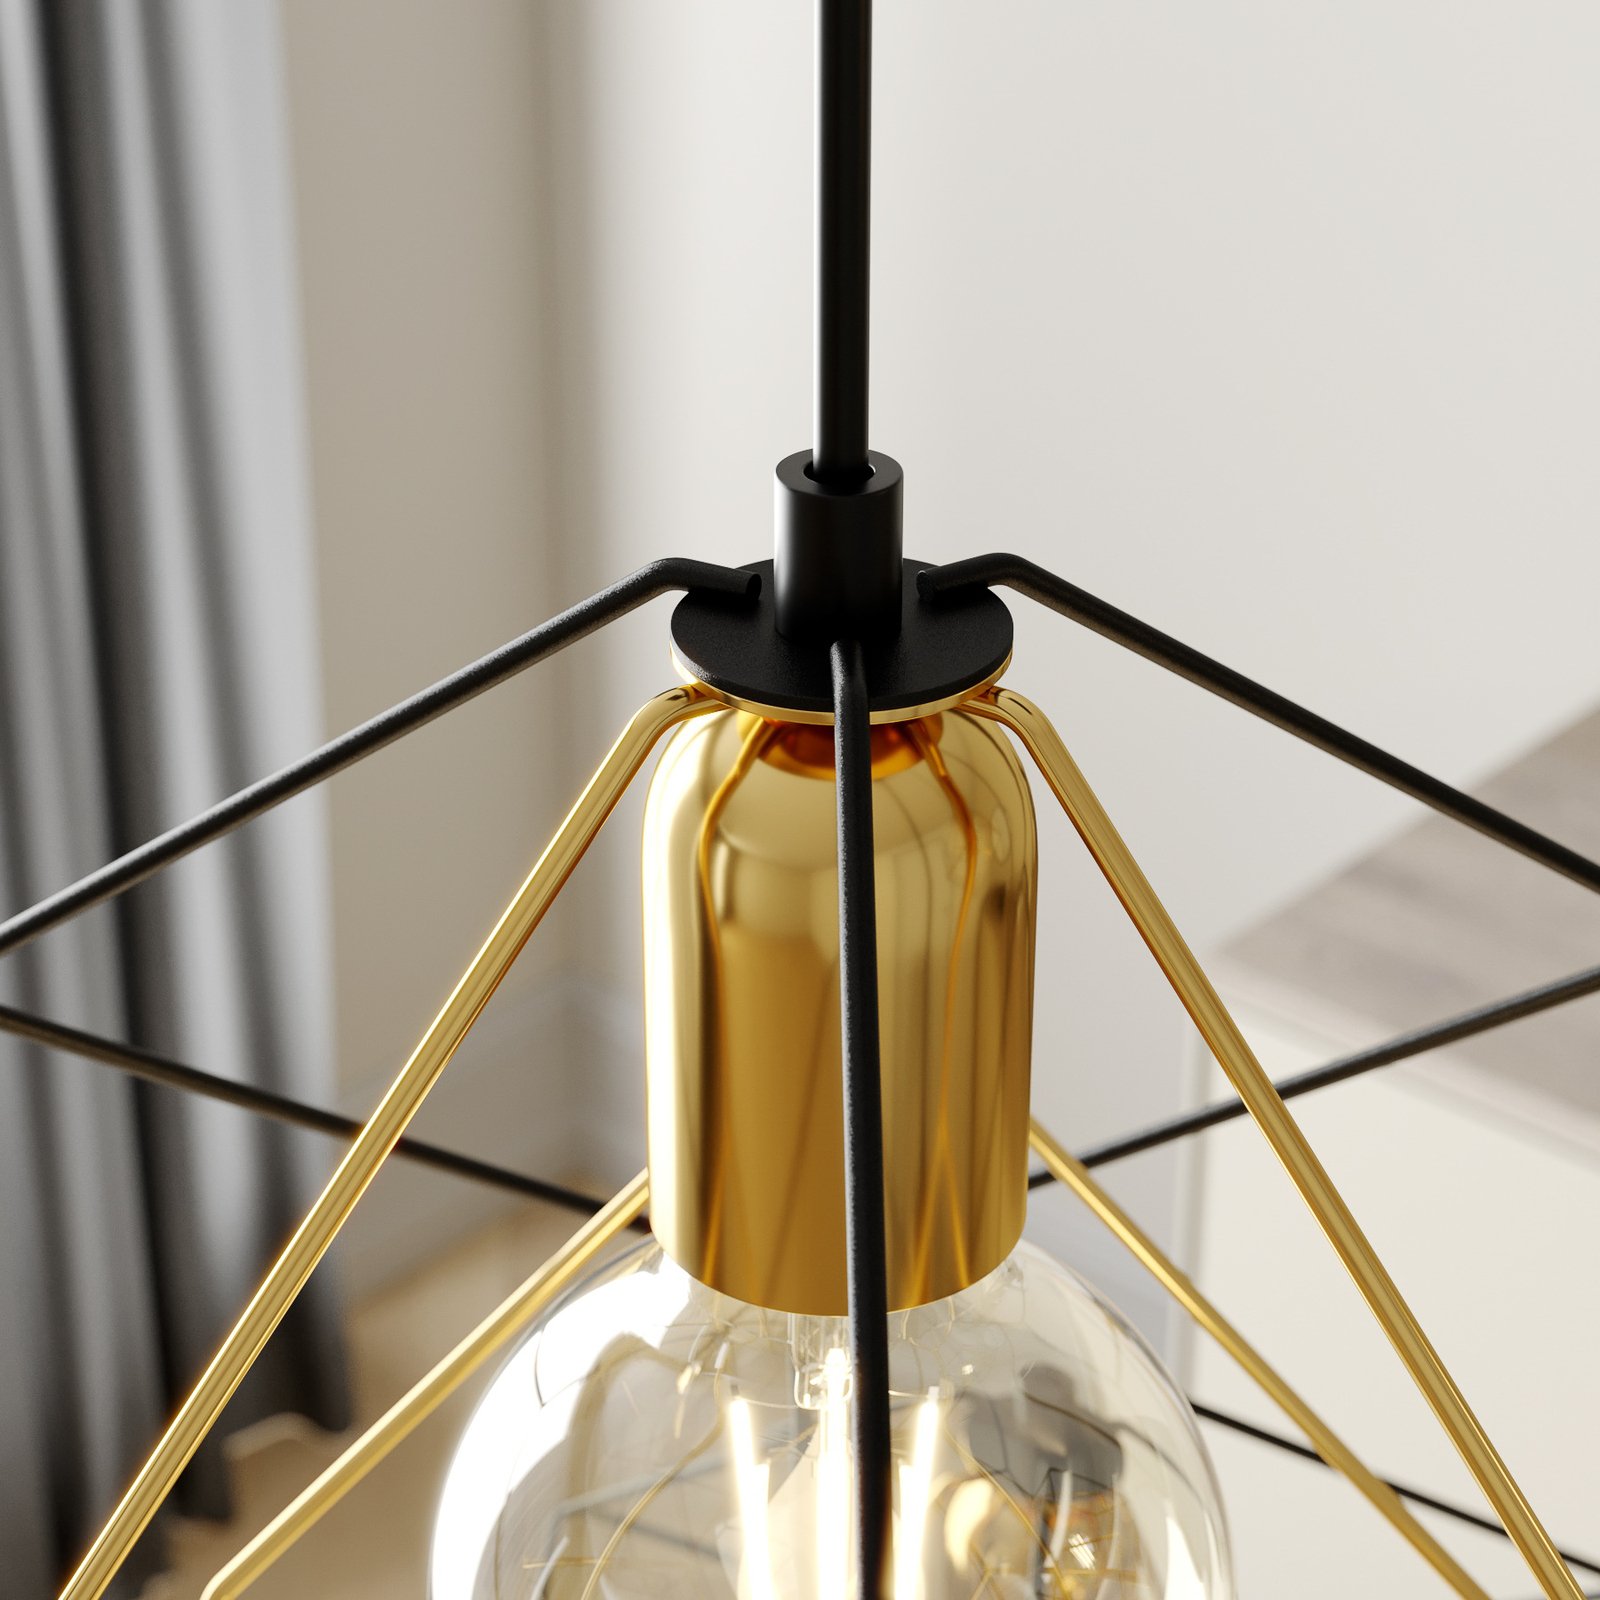 Hanglamp Alambre 6-lamps offset goud/zwart